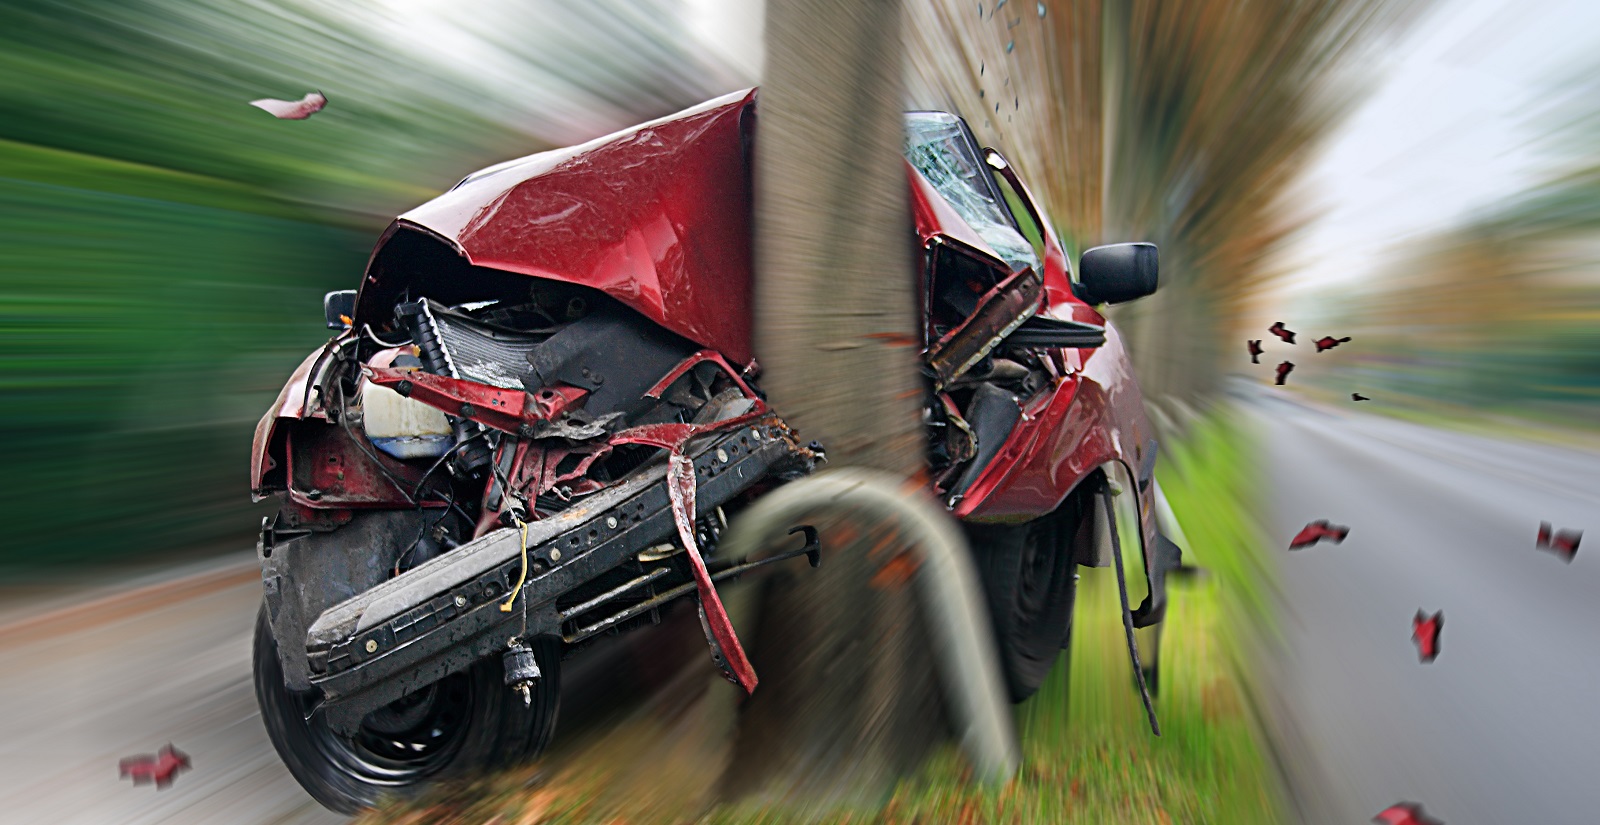 Pertanggungjawaban Hukum Pengemudi pada Kecelakaan Lalu lintas